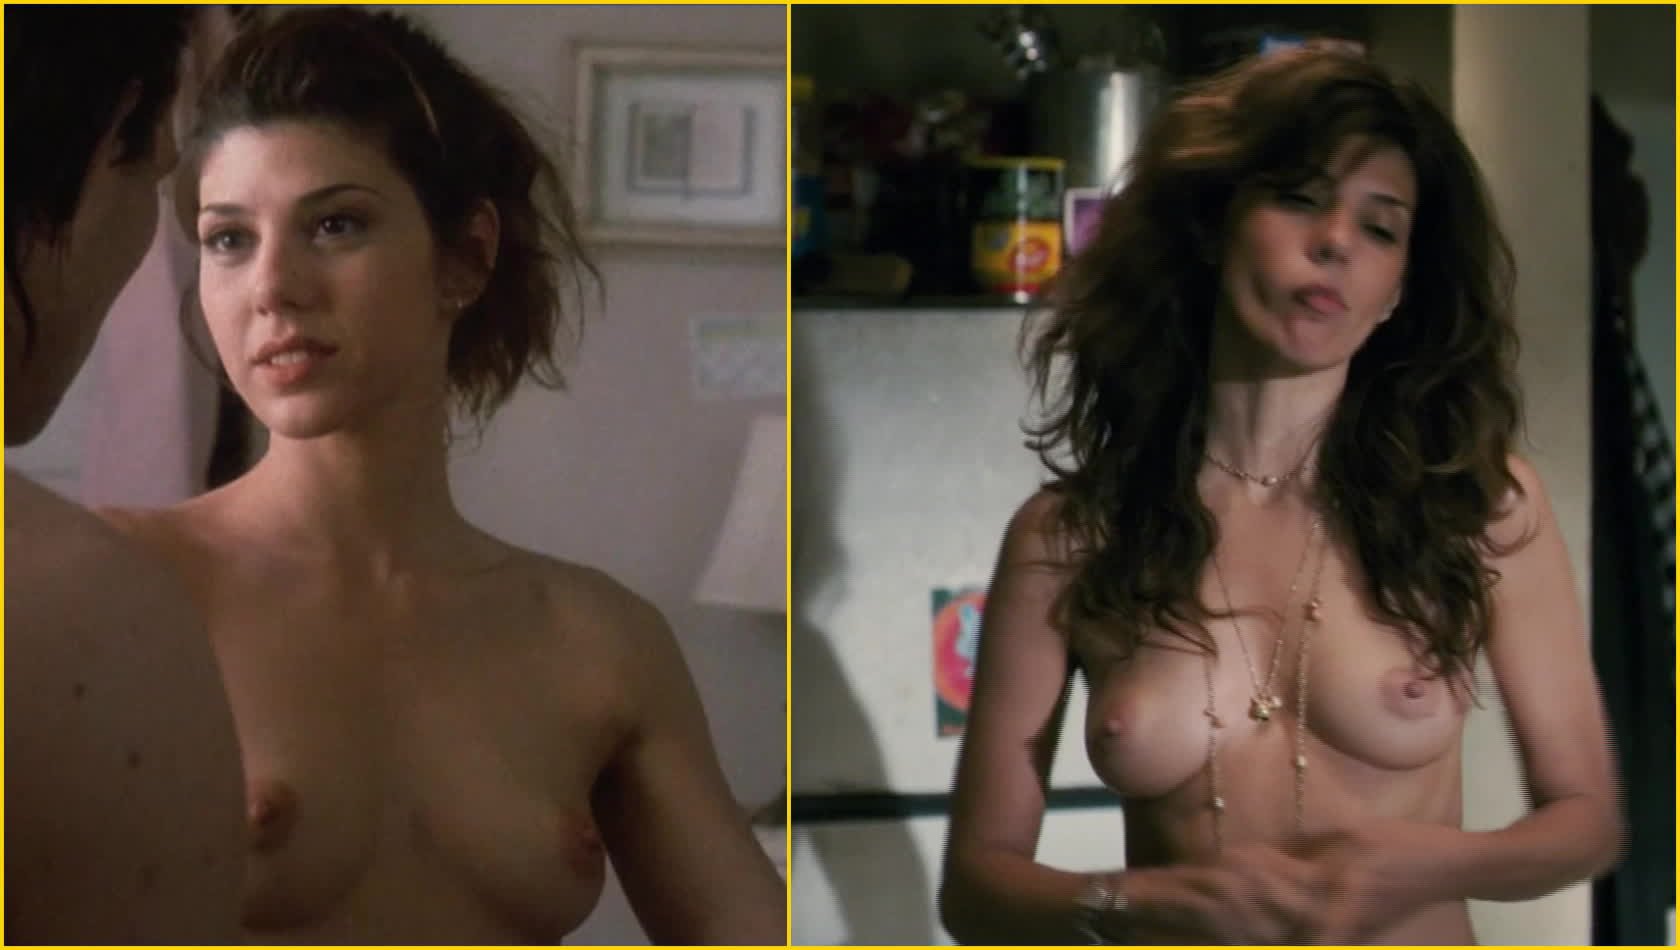 Marisa Tomei's tits 14 years apart, Nude celebs, Marisa Tomei, gif vid...